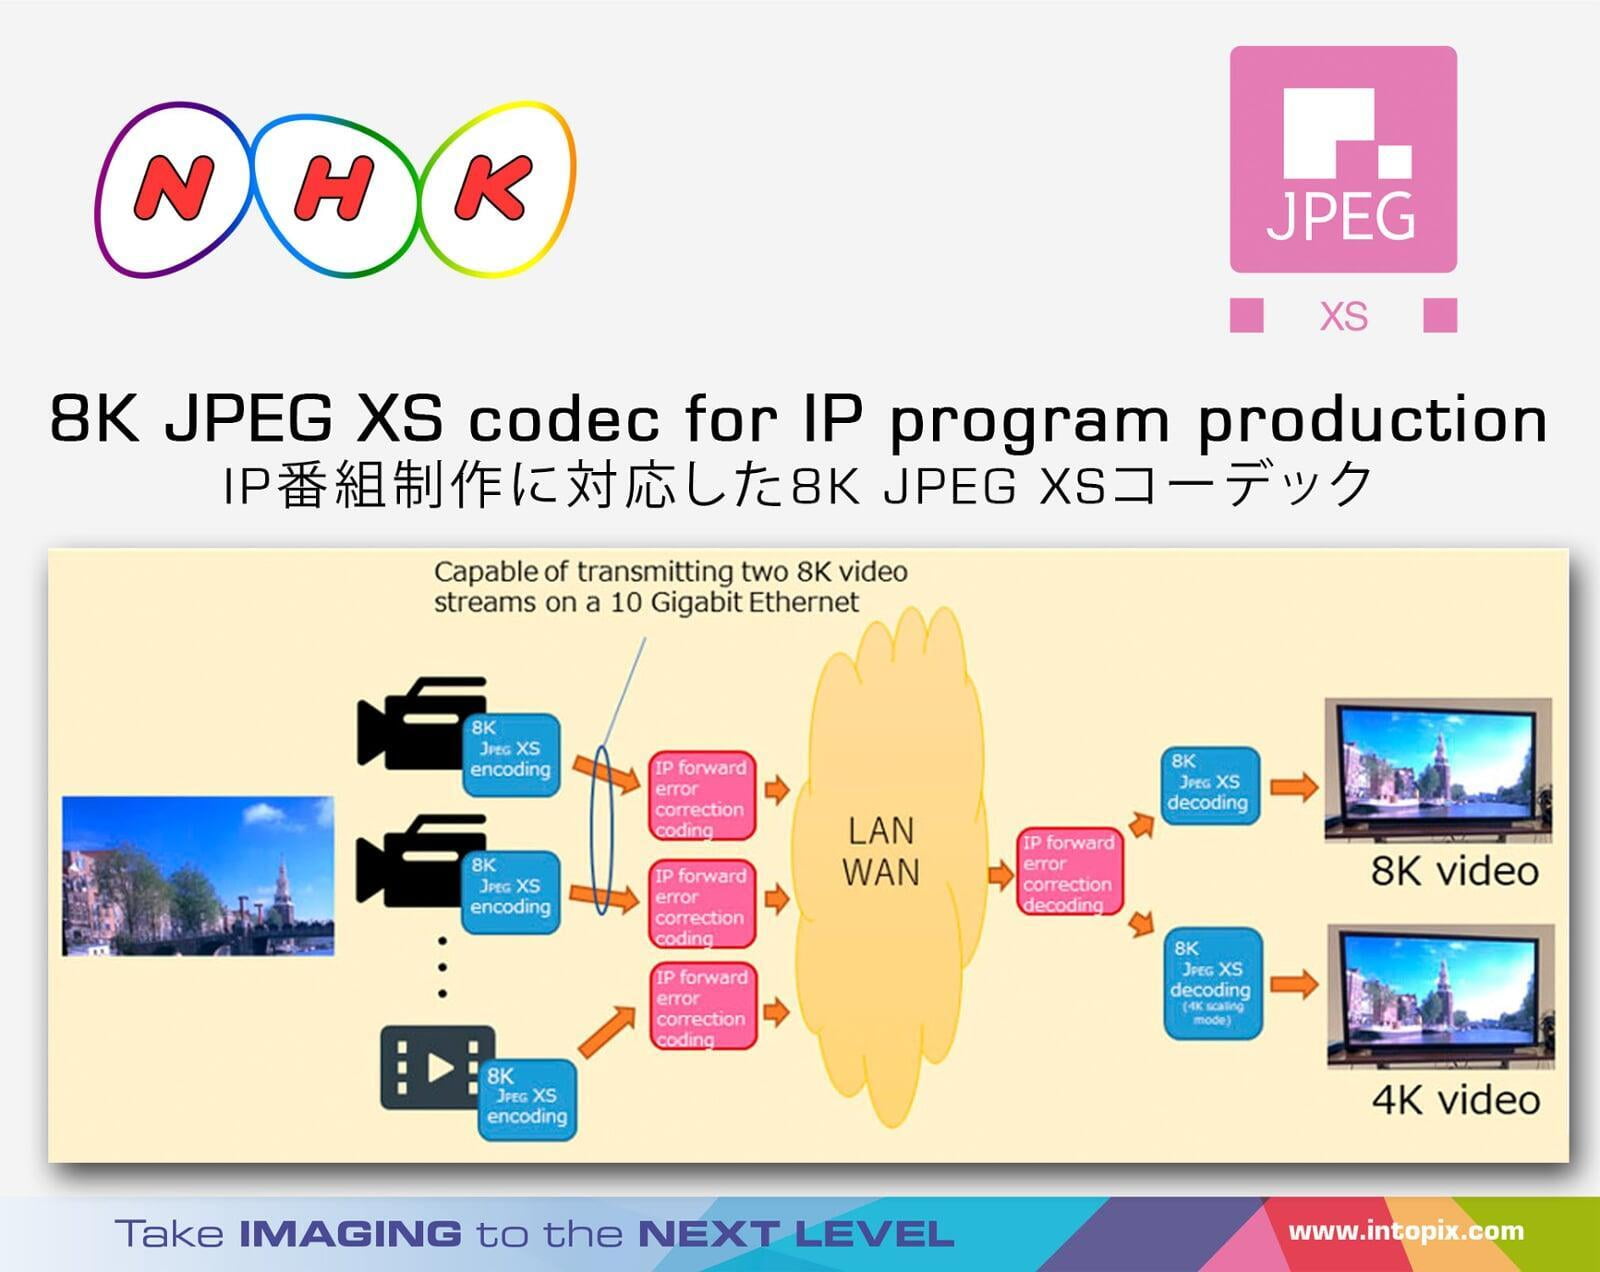 Village Island社コーデックを使用したライブ制作用の8K JPEG XSコーデックの紹介